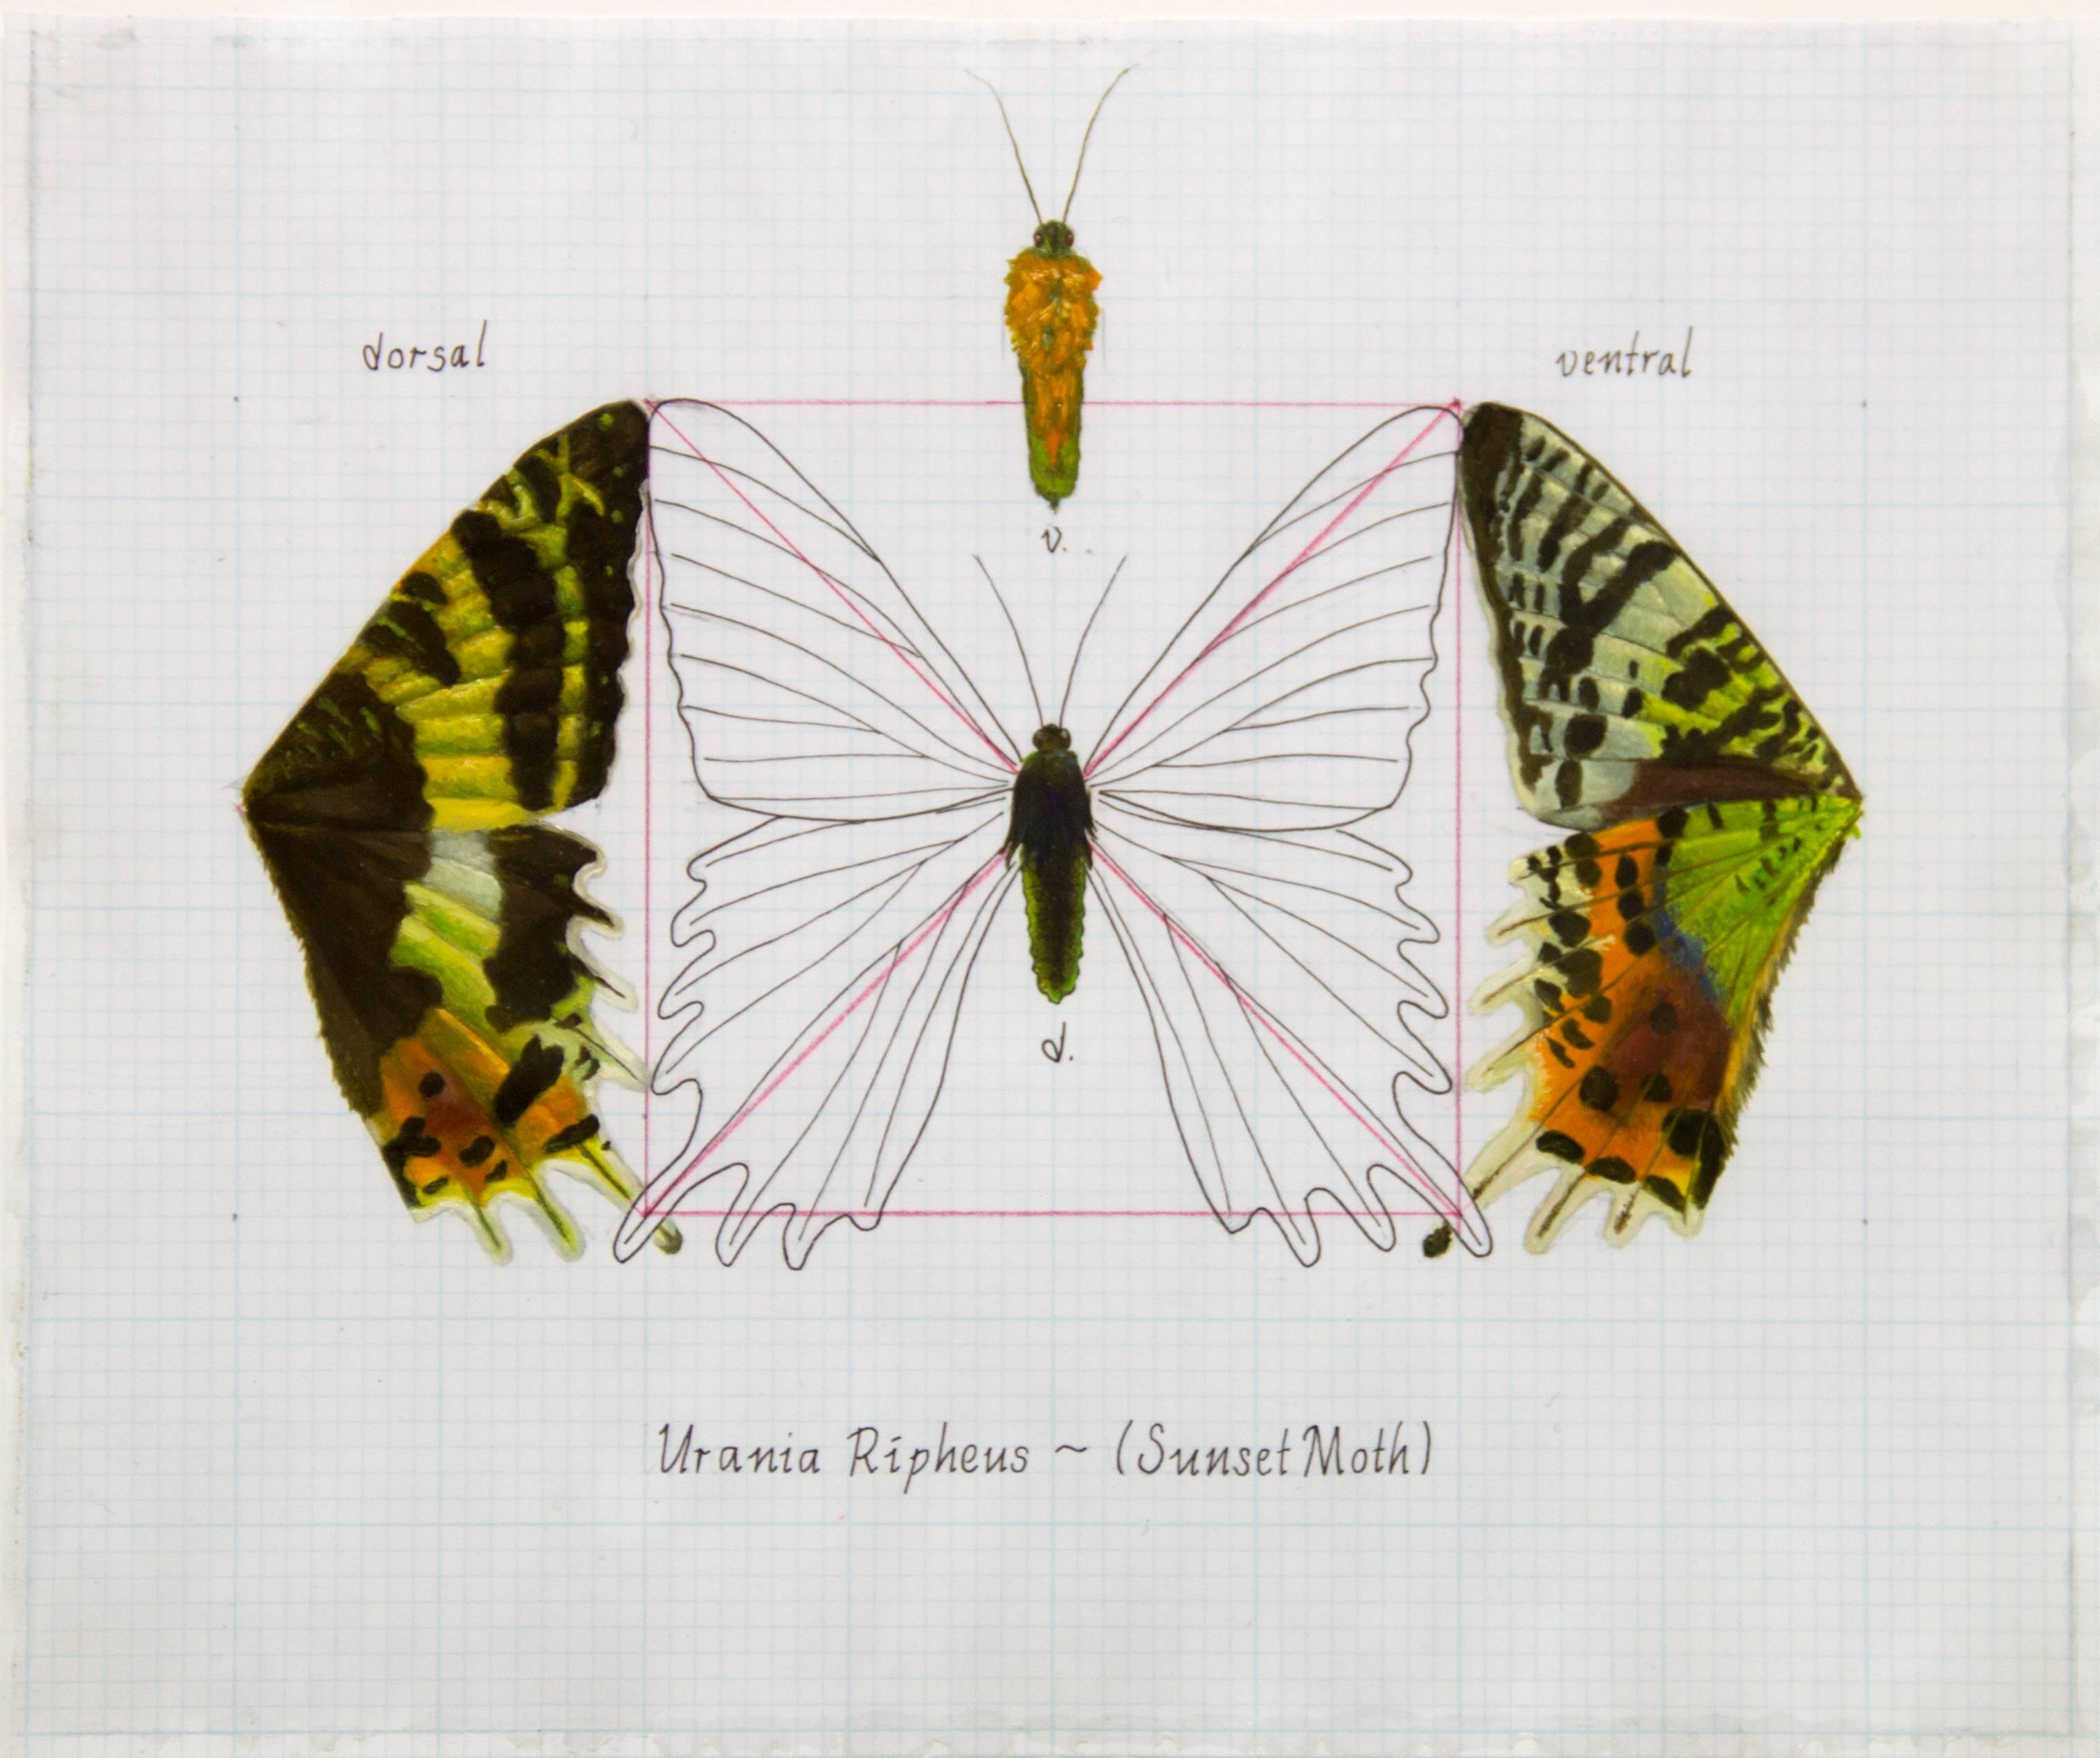 Zane York Animal Painting - "Urania Ripheus (Sunset Moth)" Realism Painting/Drawing